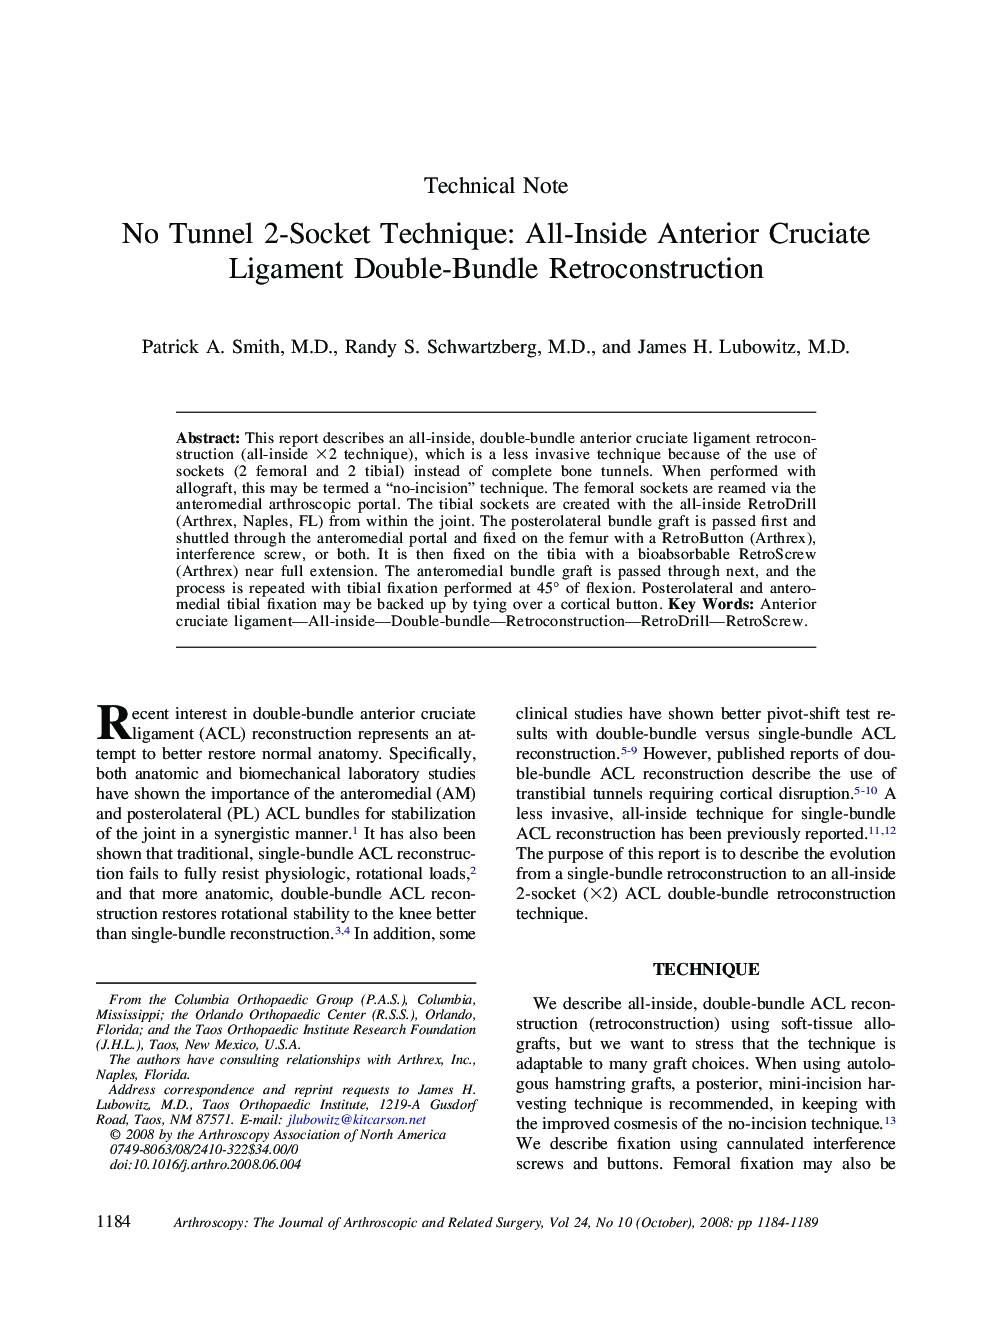 No Tunnel 2-Socket Technique: All-Inside Anterior Cruciate Ligament Double-Bundle Retroconstruction 